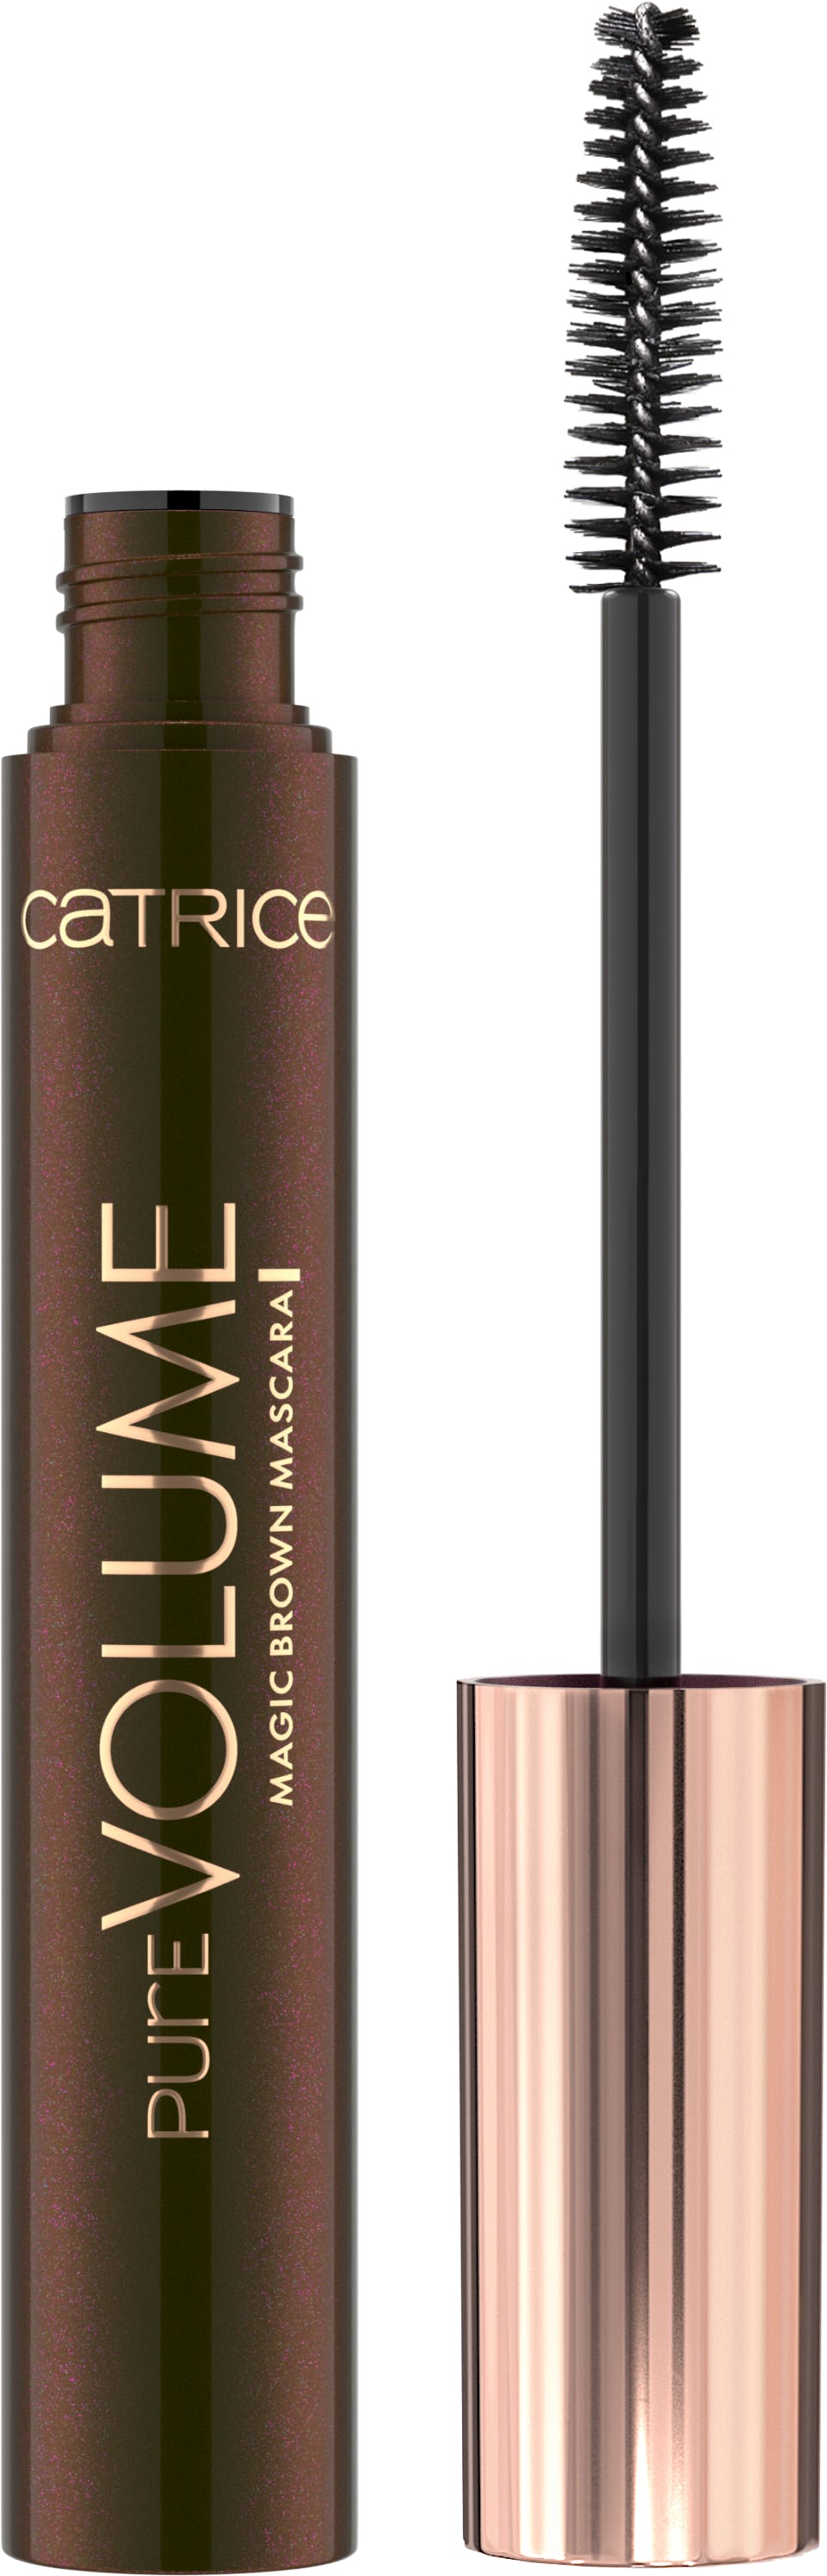 Catrice Pure Volume Magic Brown Mascara 010 10 ml